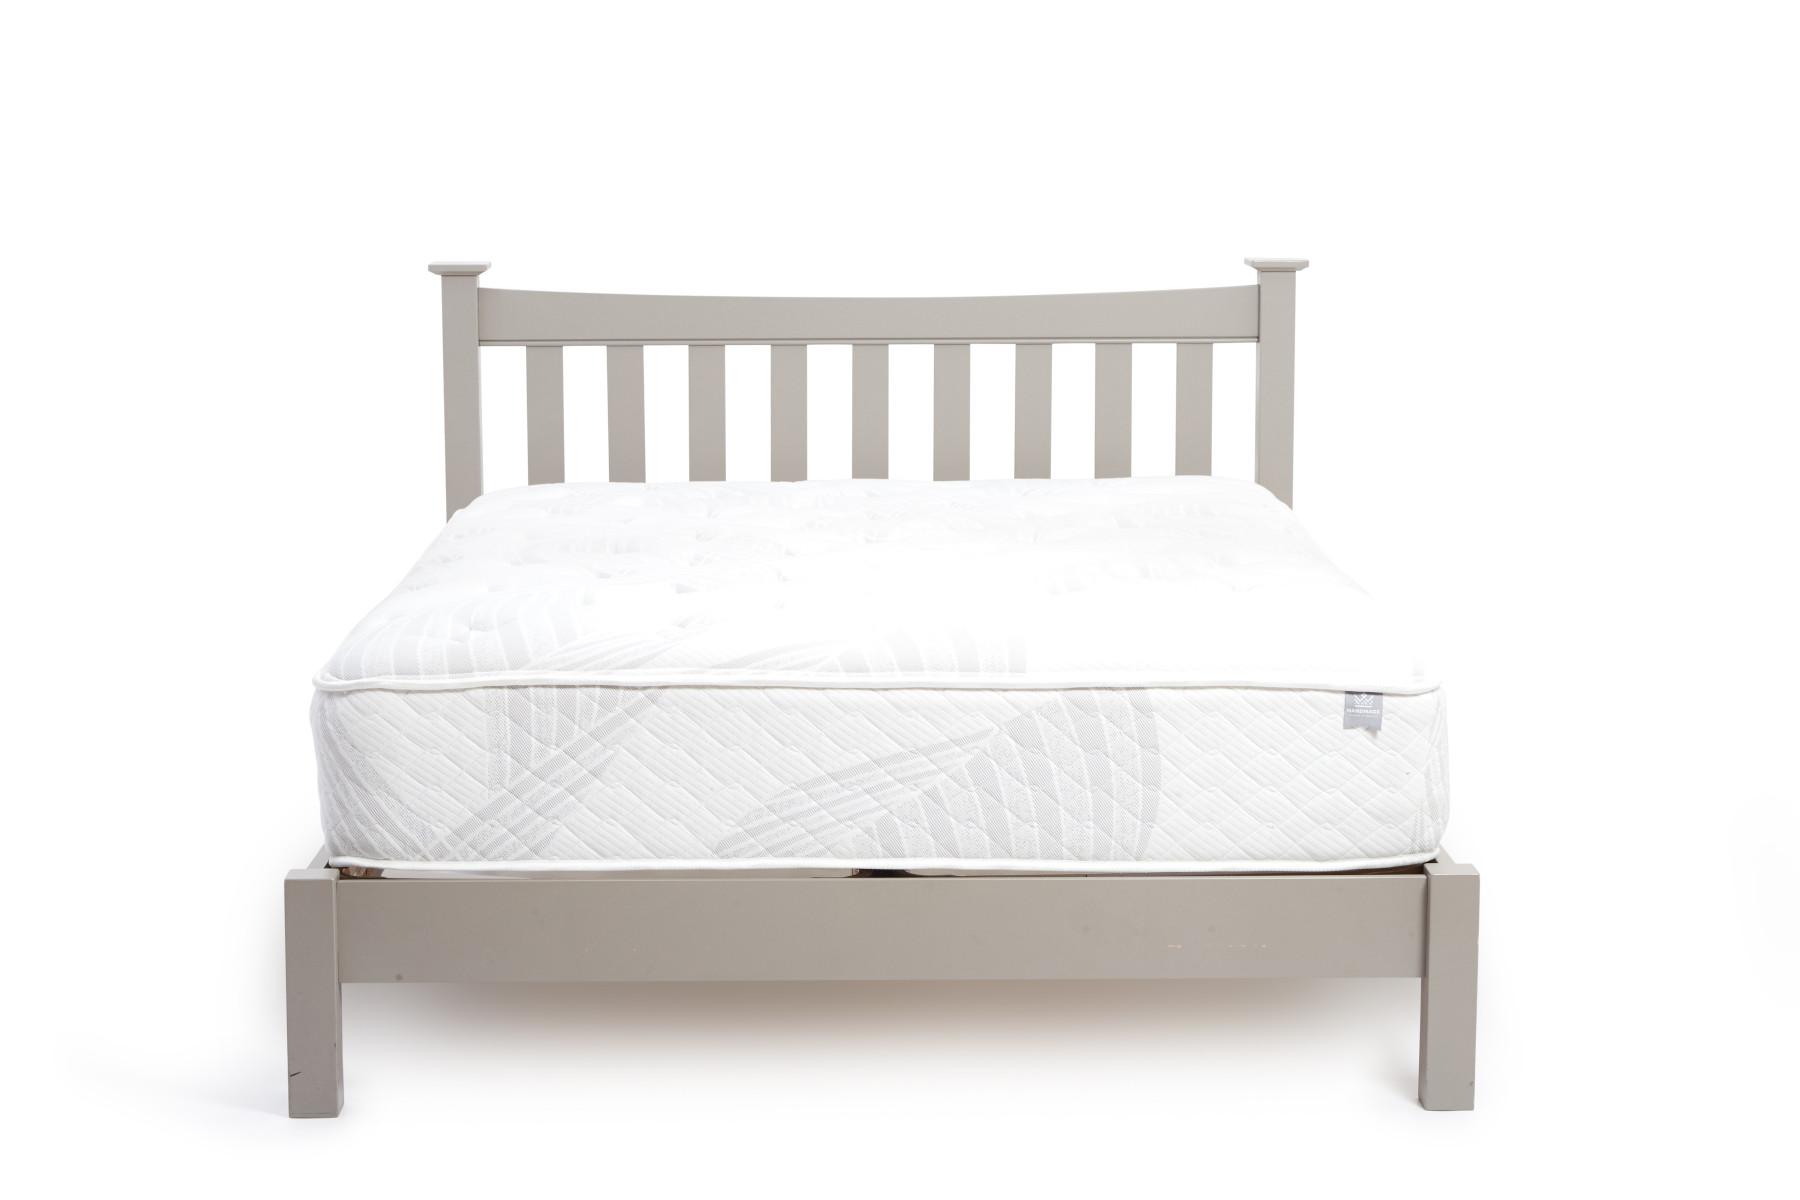 Shropshire Bed Frame